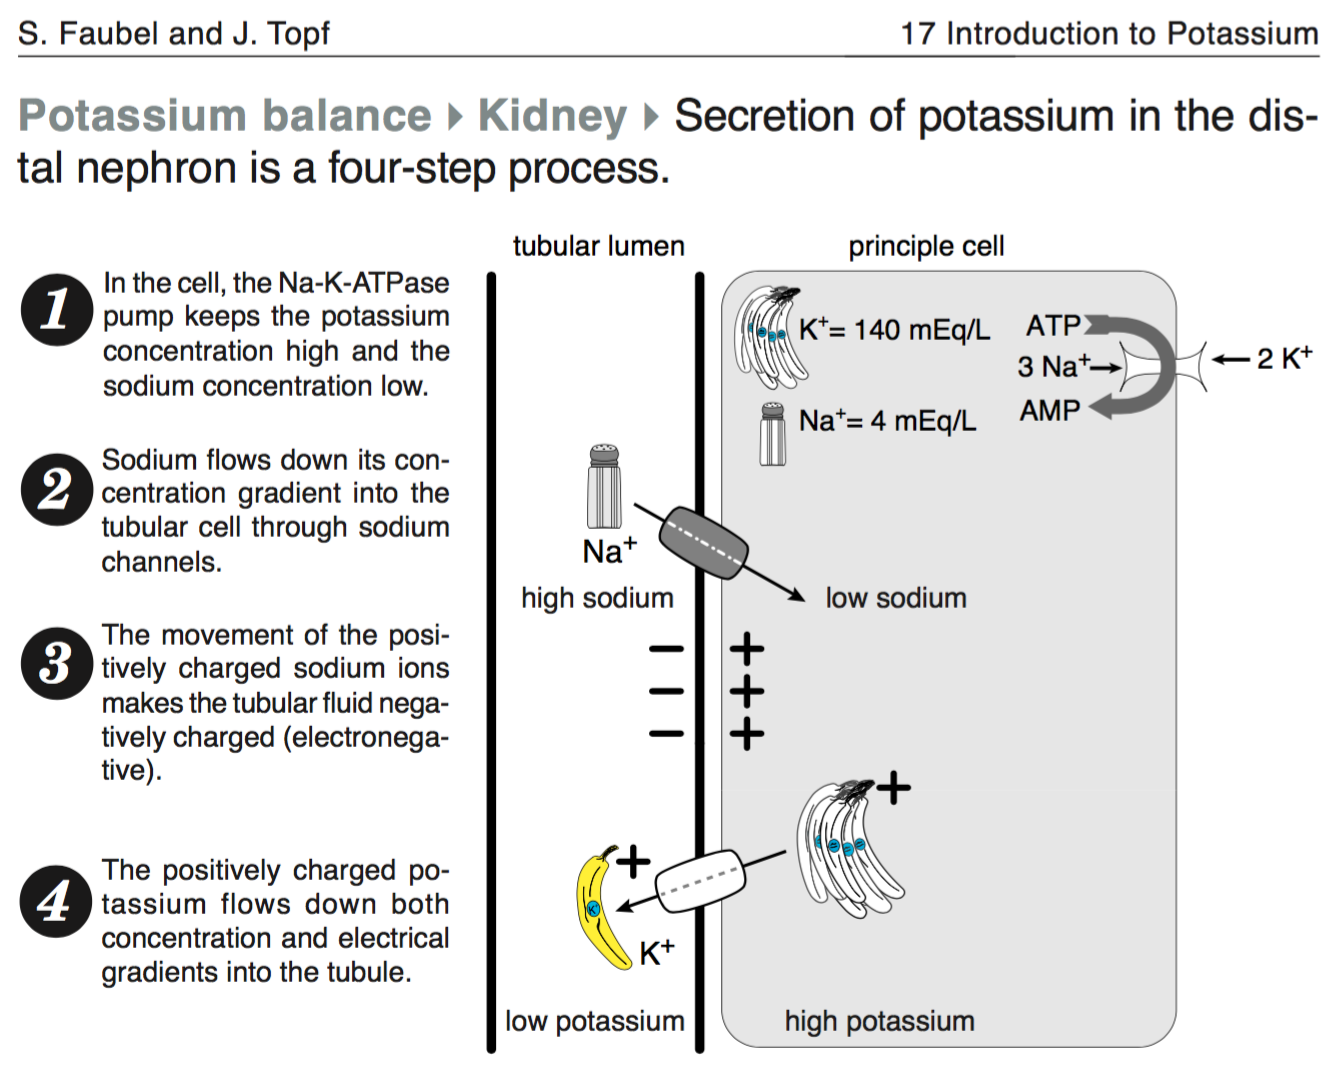 REBOOT: Hyperkalemia. Secretion of potassium in the nephron.